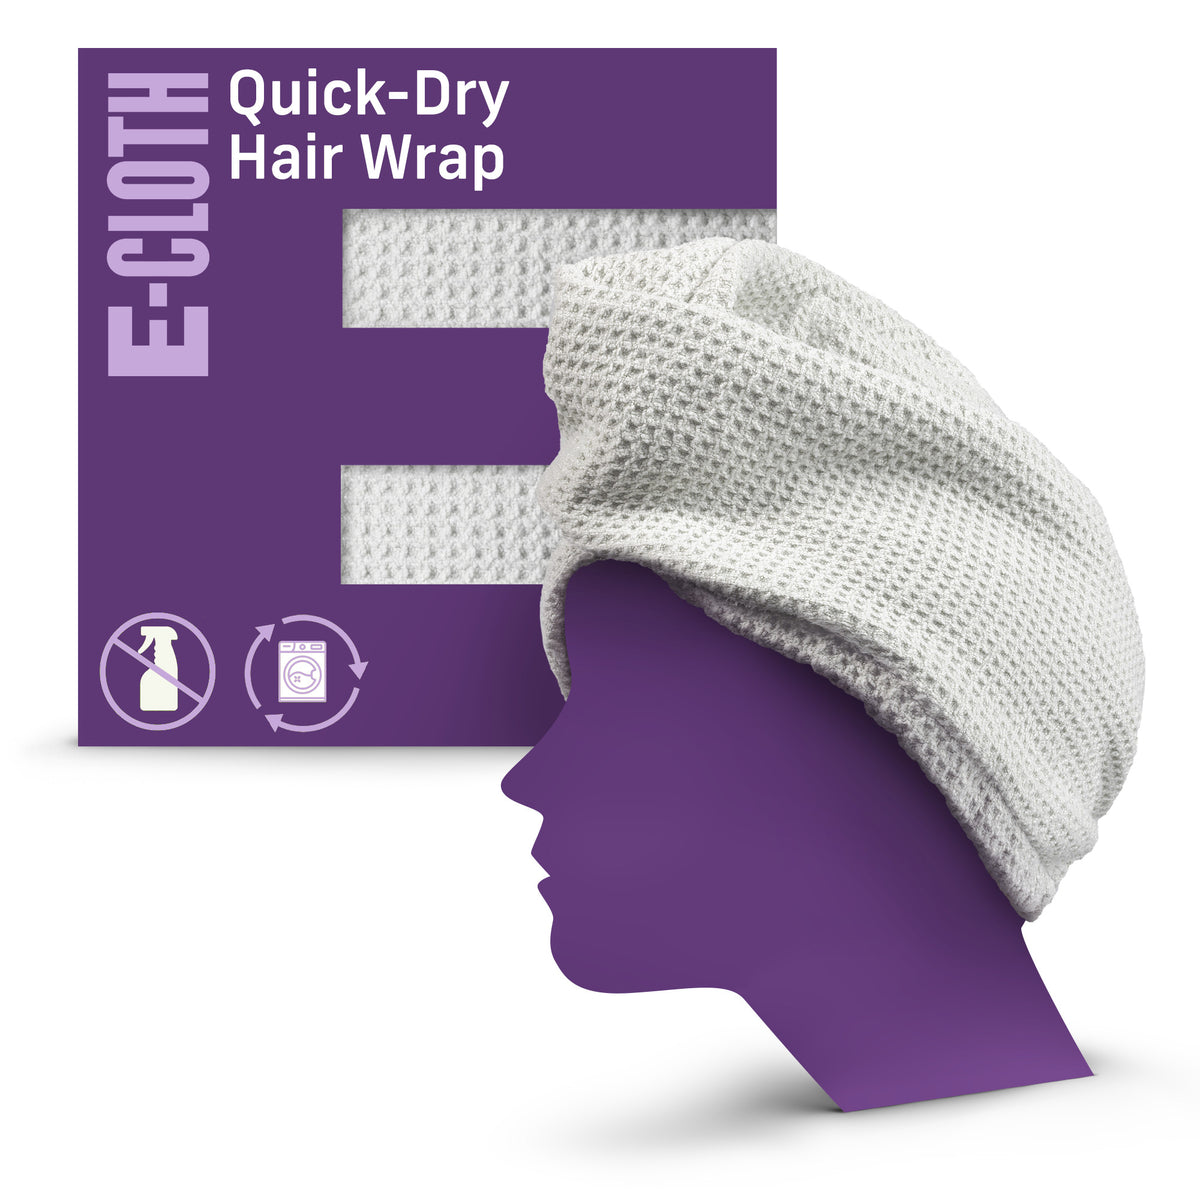 Quick-Dry Hair Wrap